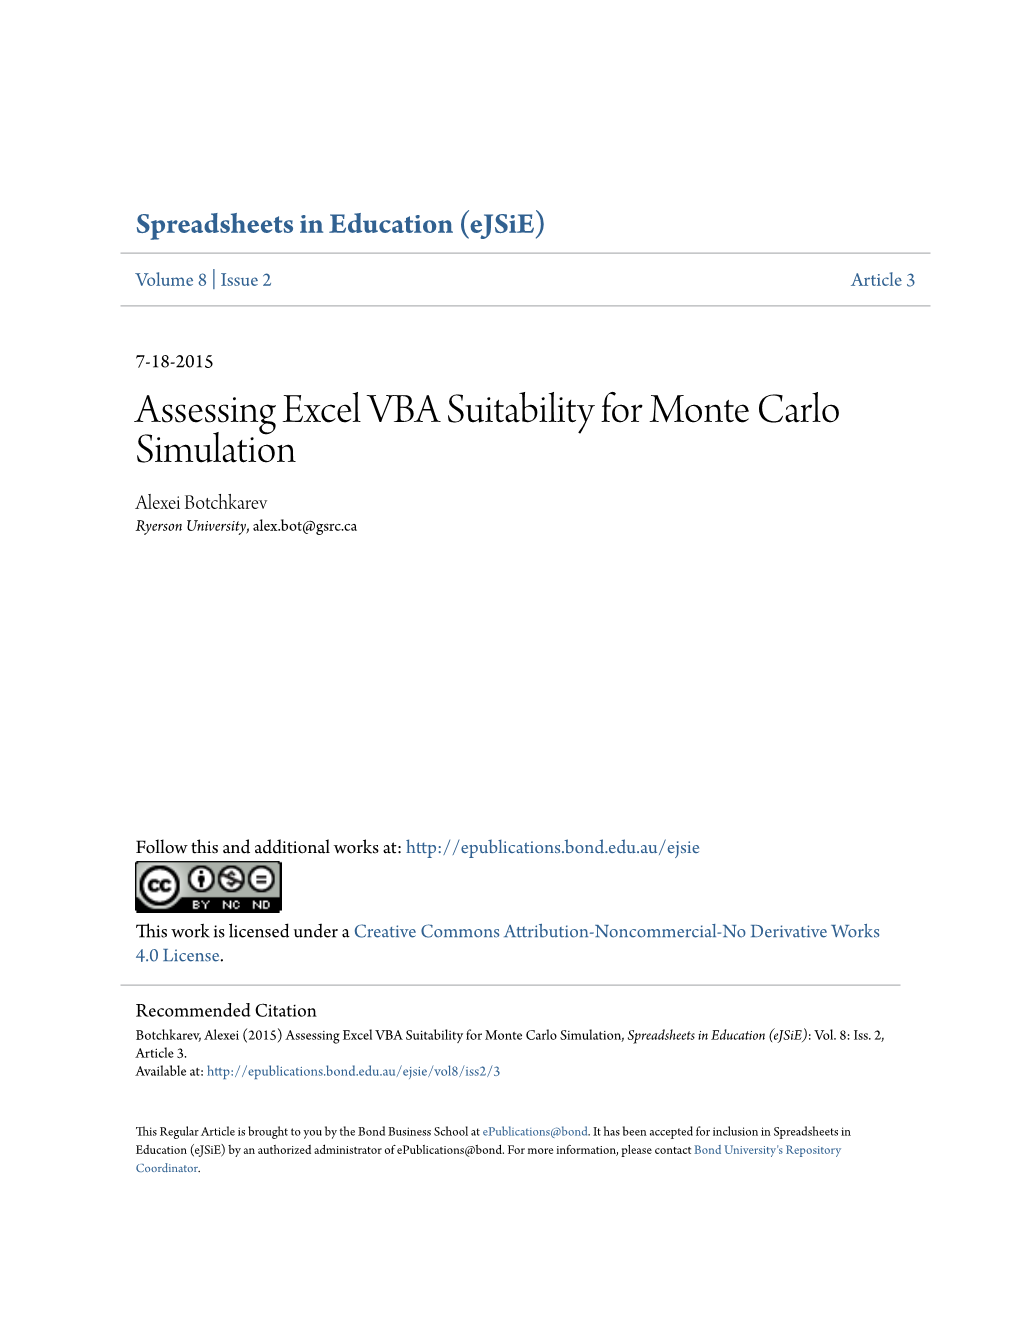 Assessing Excel VBA Suitability for Monte Carlo Simulation Alexei Botchkarev Ryerson University, Alex.Bot@Gsrc.Ca